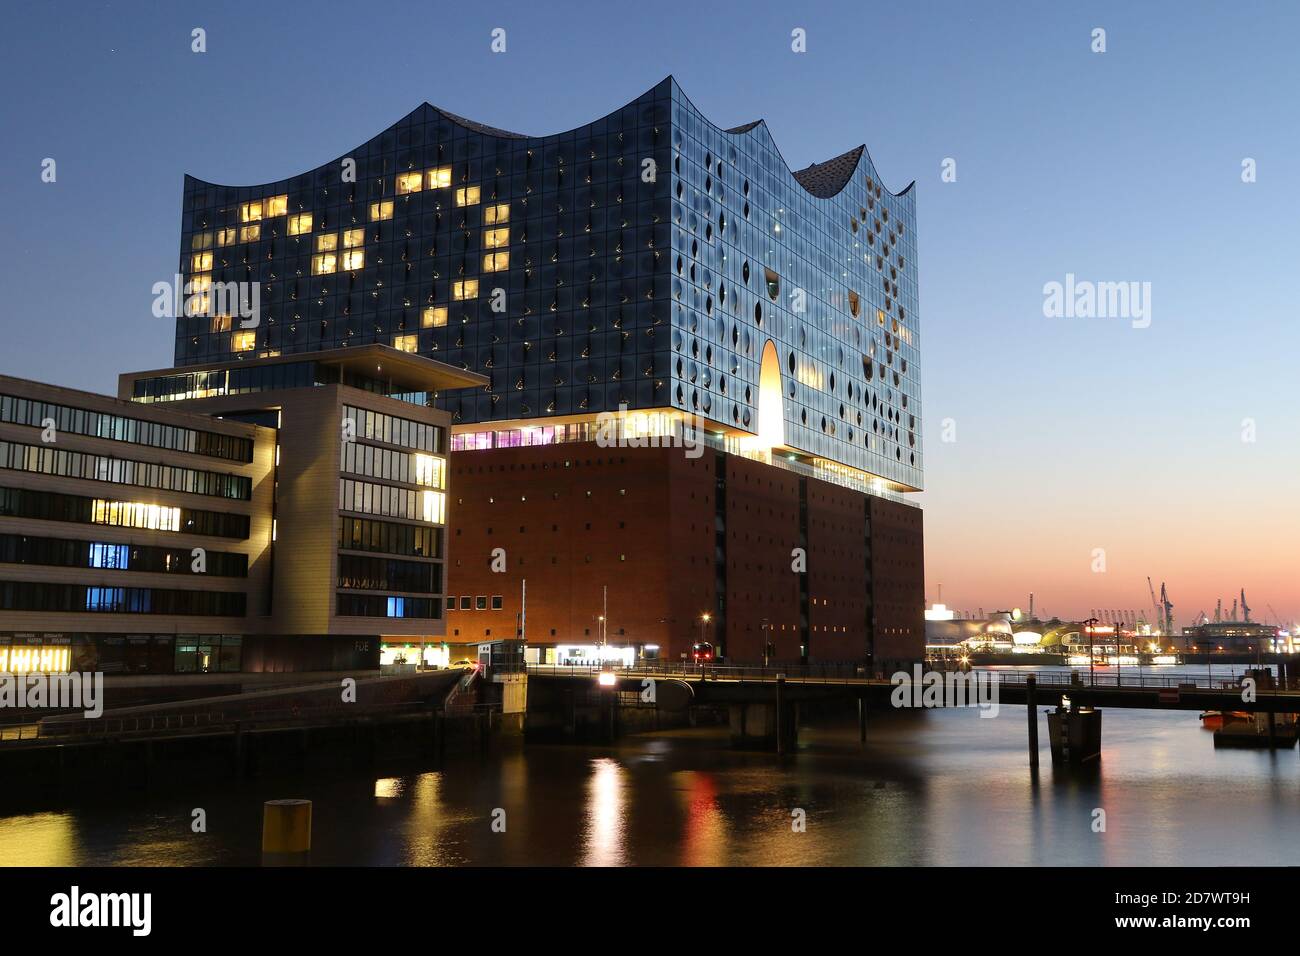 Heart-shaped illuminated windows of The Westin Hotel, Elbphilharmonie, Hafencity, Hamburg, Germany, 26.03.2020. Stock Photo